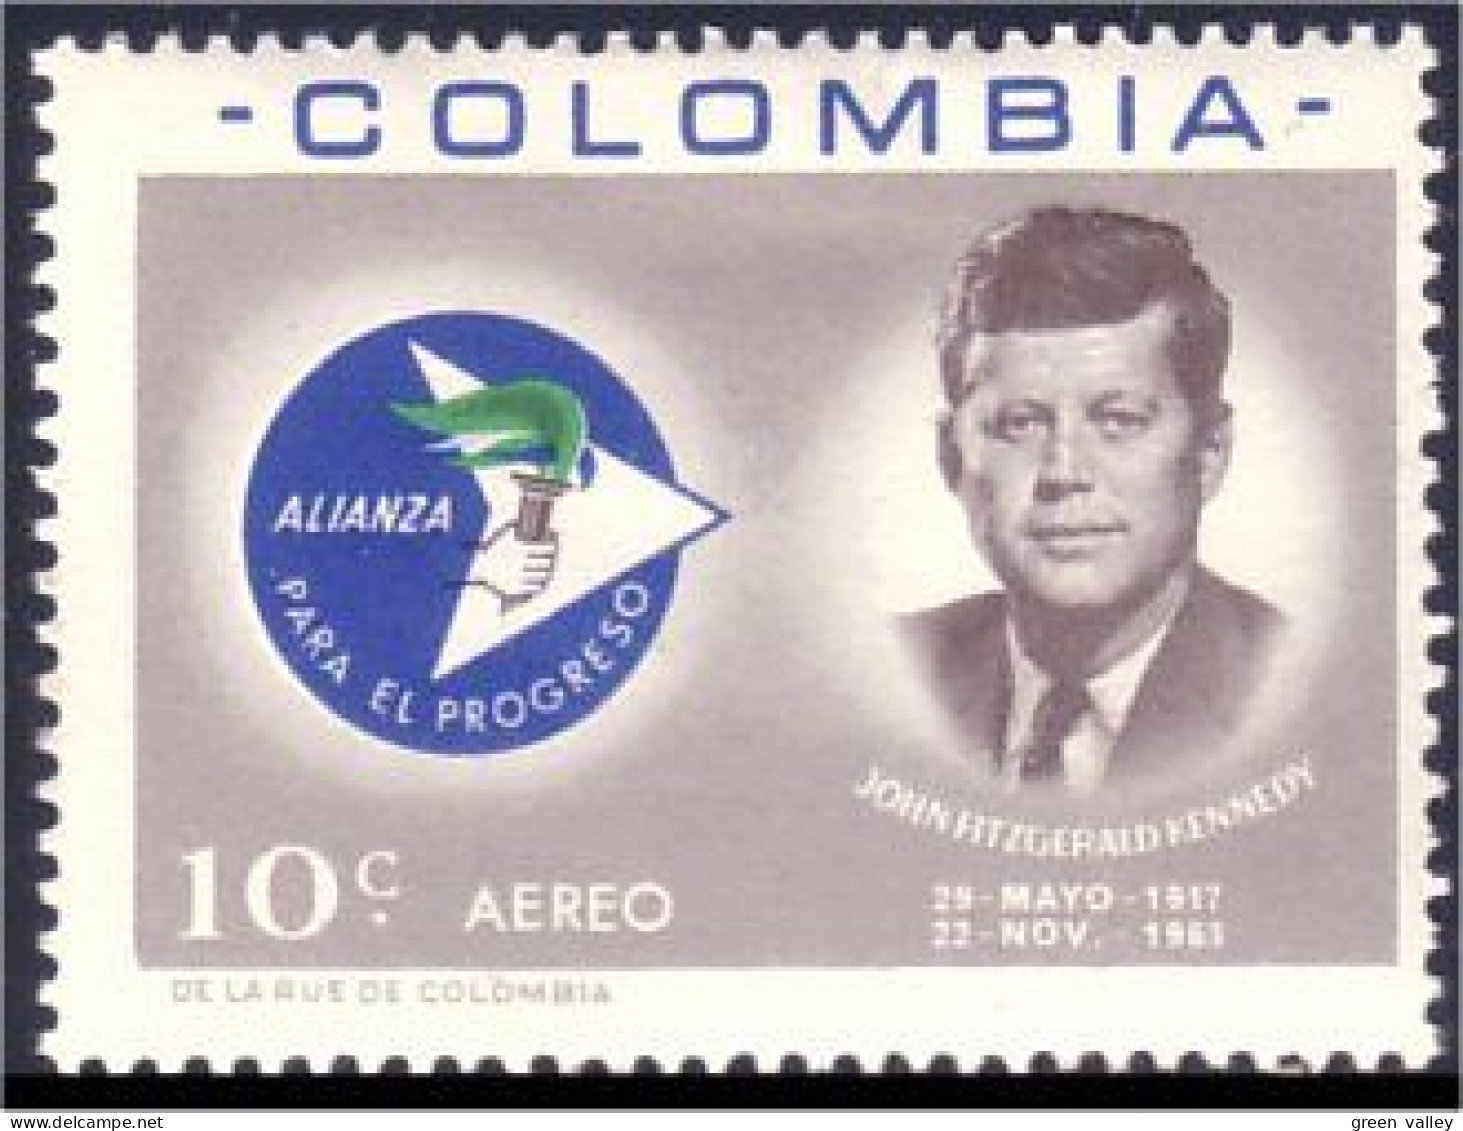 268 Colombie Kennedy MH * Neuf (COL-15) - Kennedy (John F.)